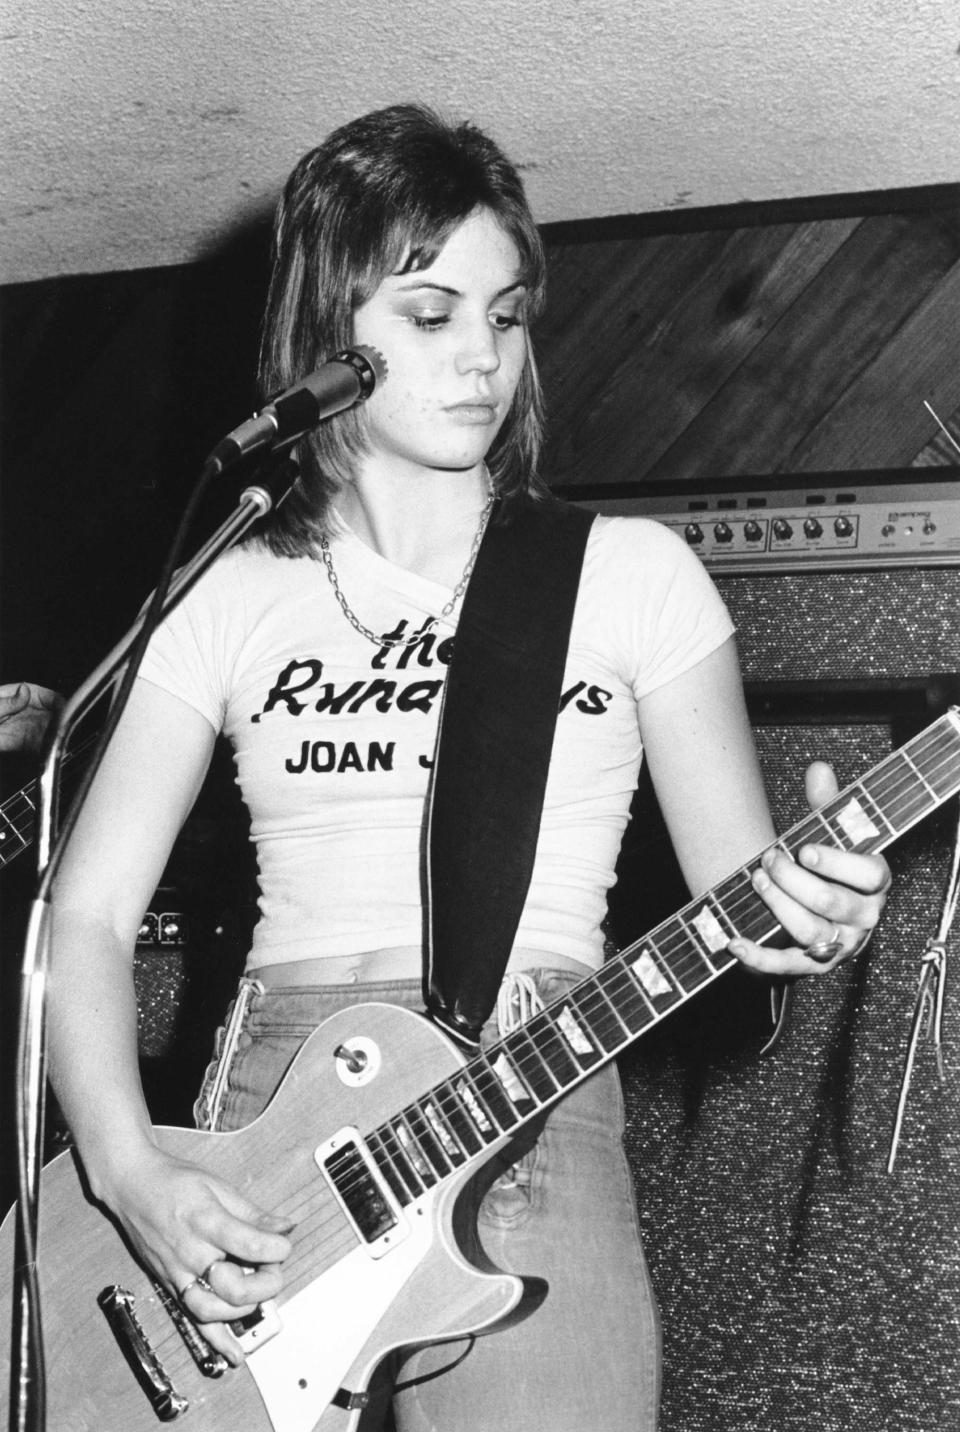 A teenage phenomenon in the Runaways, the guitarist Joan Jett blazed a trail for female rock stars with one singularly badass head of hair.